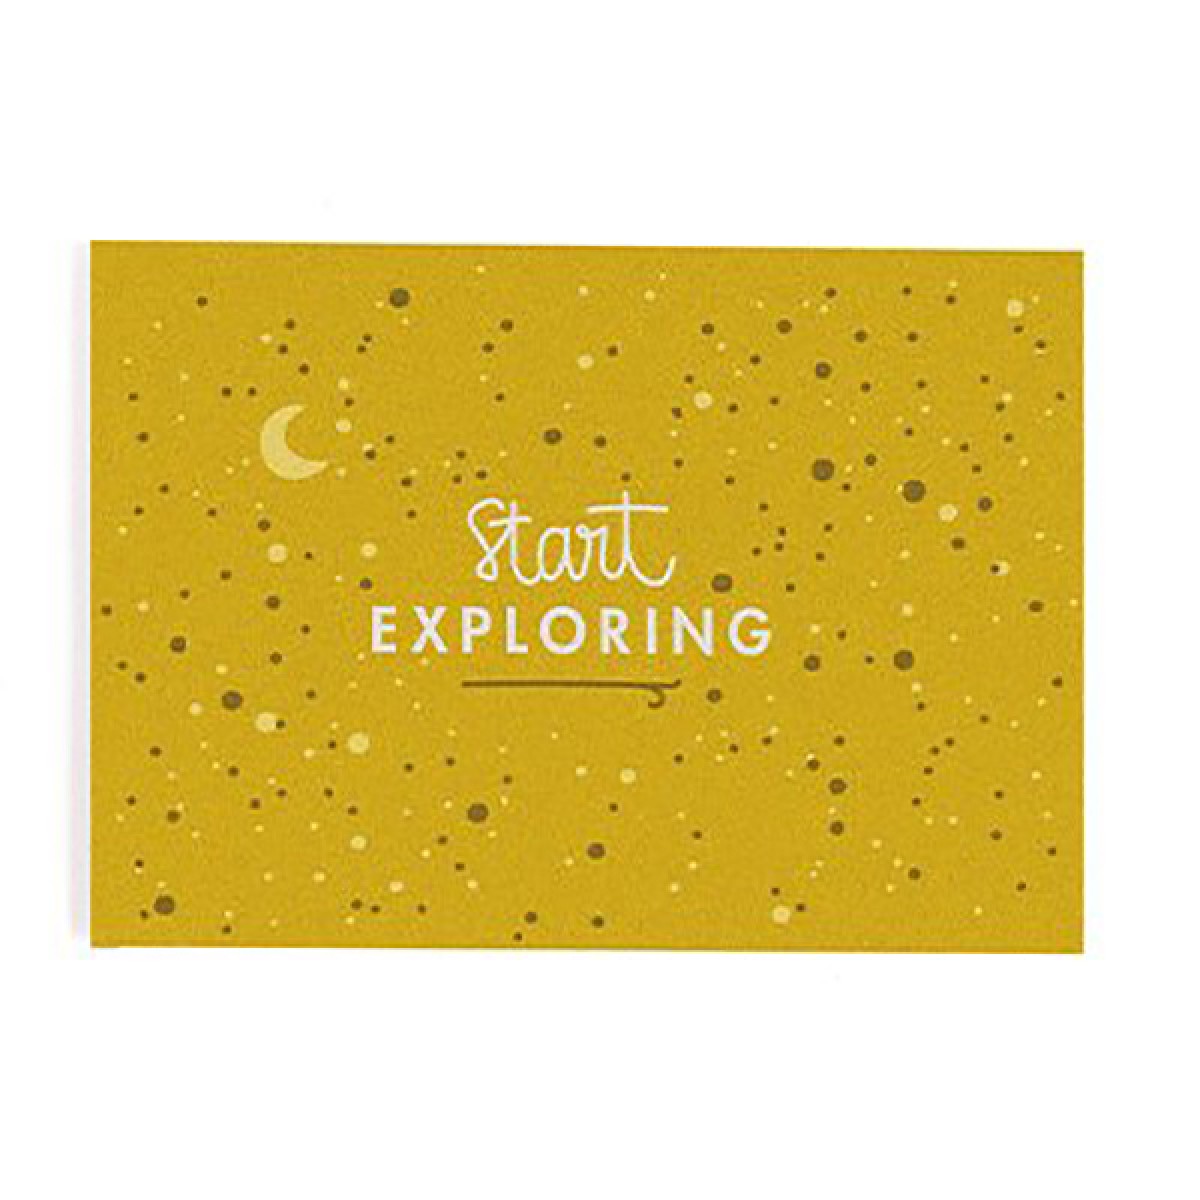 "Start exploring" Postkarte von Roadtyping